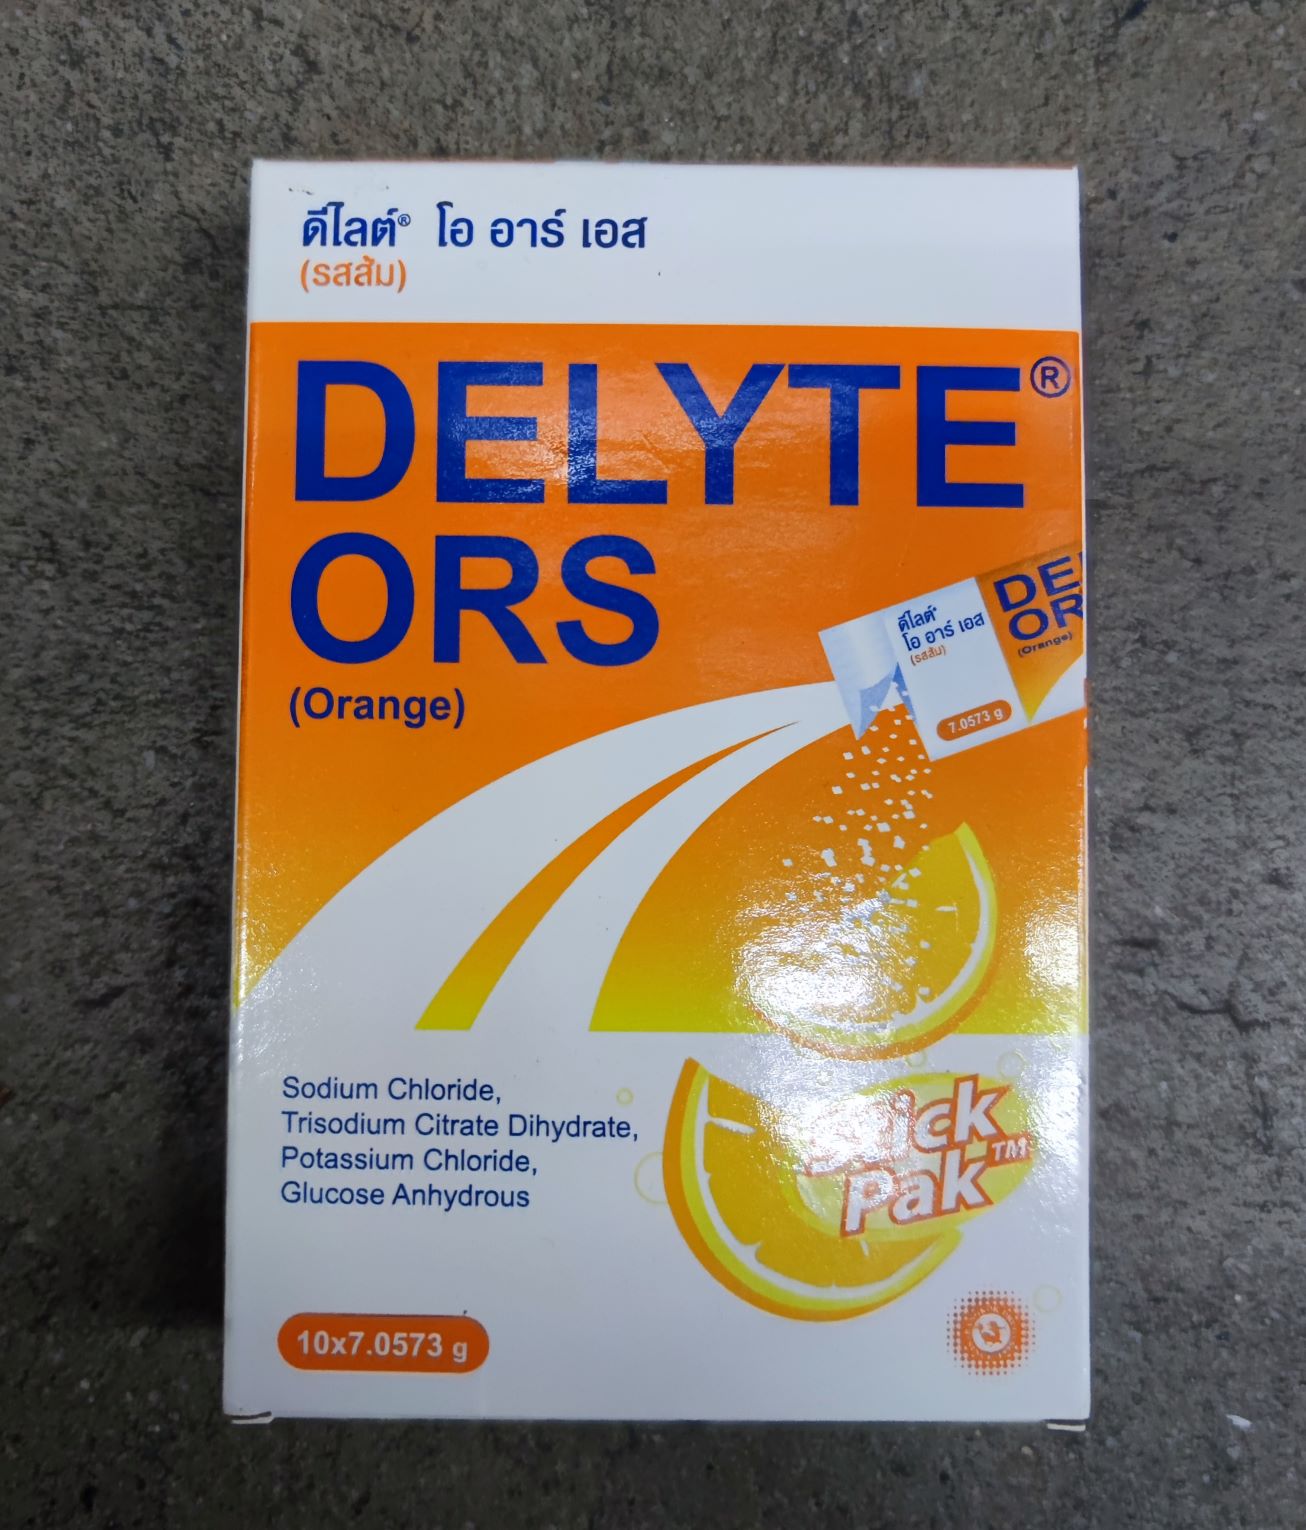 Delyte ORS orange (1 กล่อง มี 10 ซอง) เกลือแร่ ดีไลต์  รสส้ม จำนวน 1 กล่อง 1x10 Sachets.